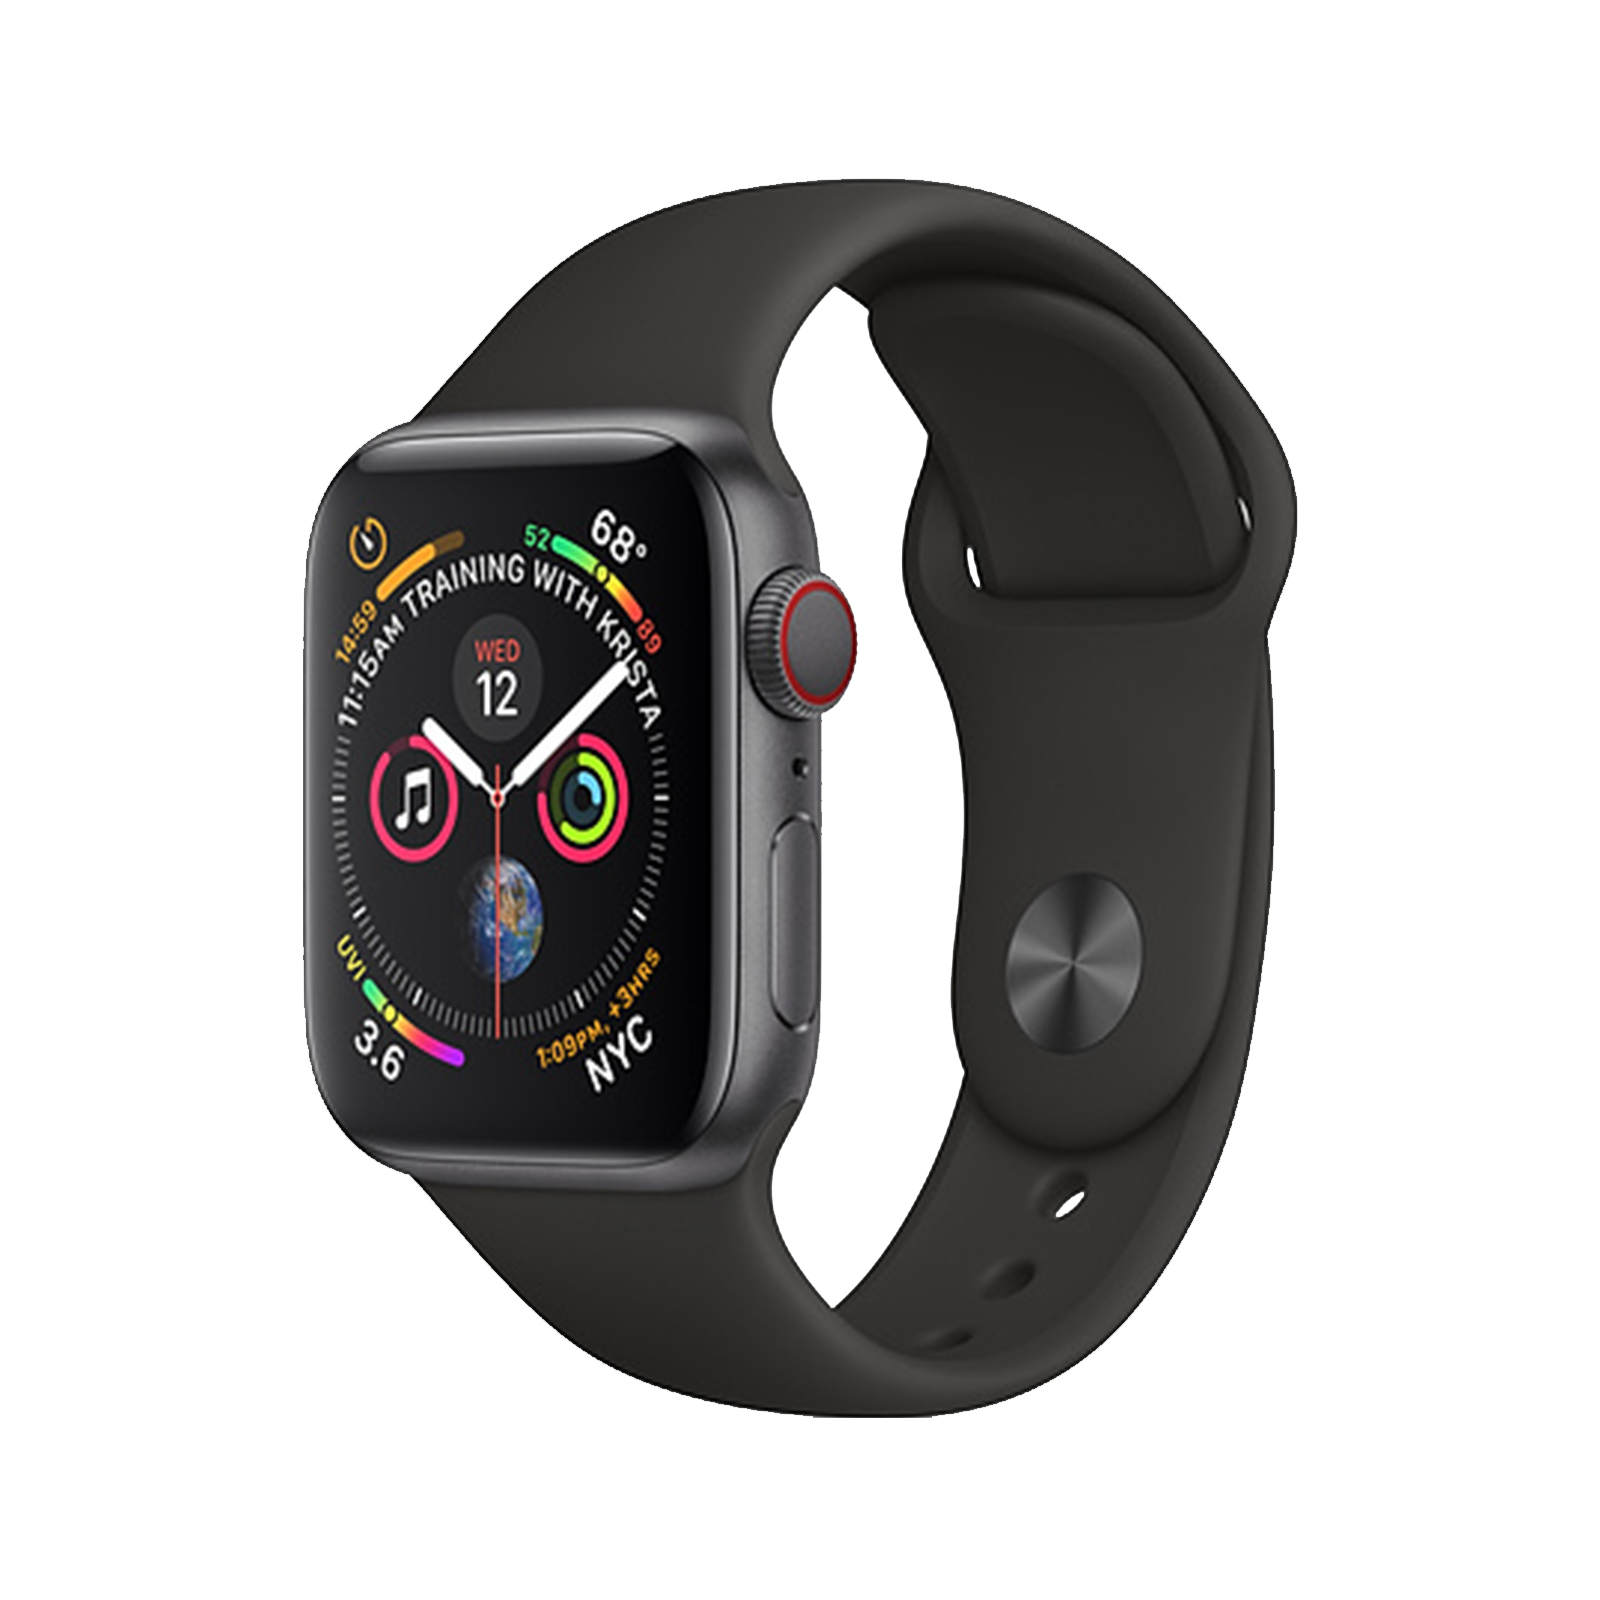 Apple Watch Series 4 [Wi-Fi + Cellular] [Aluminum] [44mm] [Black] [Brand New] 